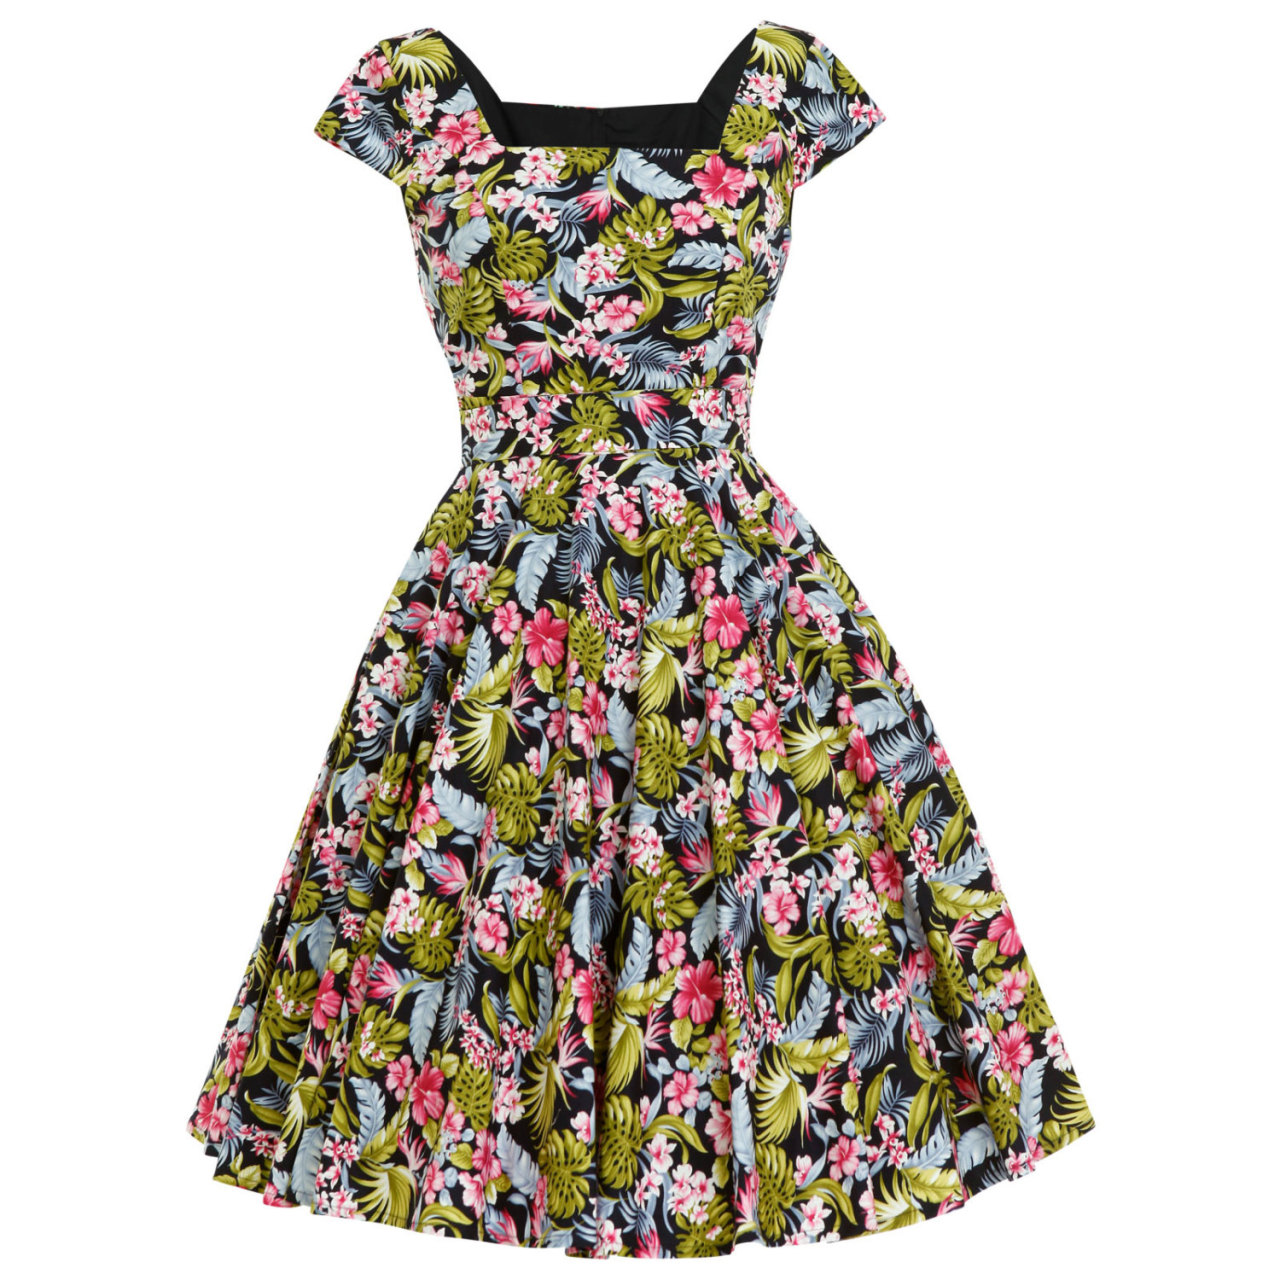 Vintage inspired summer dresses by...